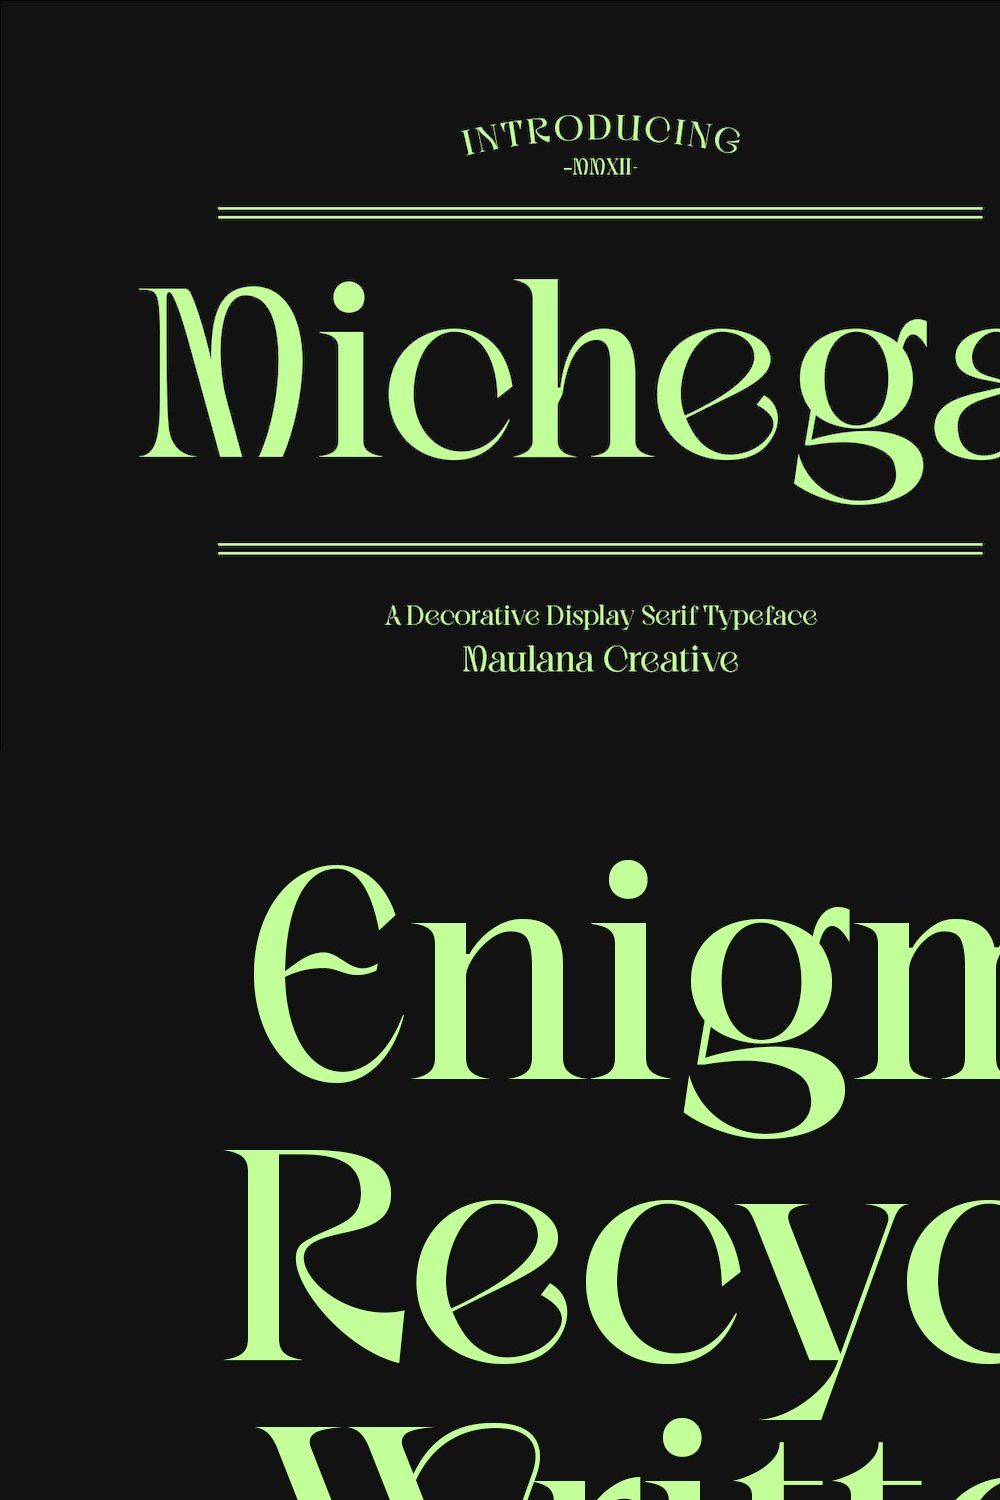 Michega Decorative Serif Typeface pinterest preview image.